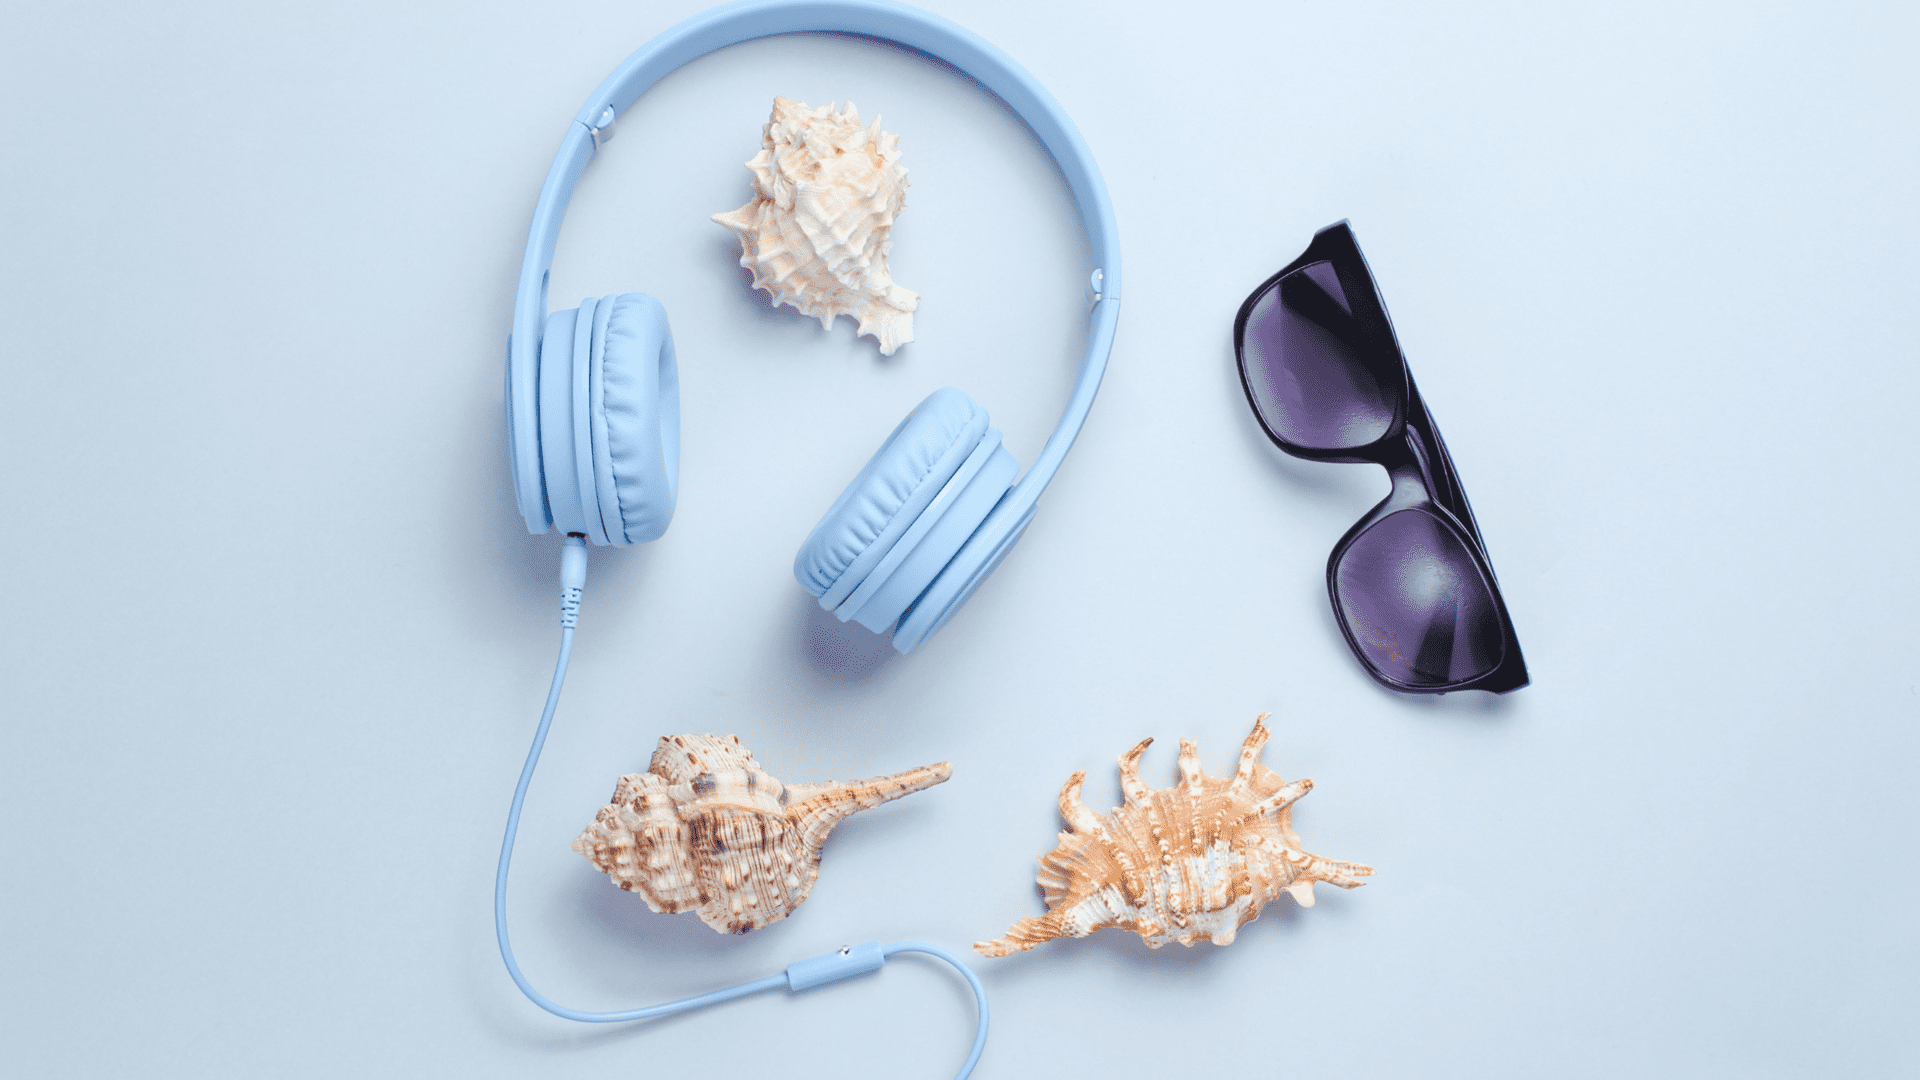 Sunglasses, Music, and Seashells